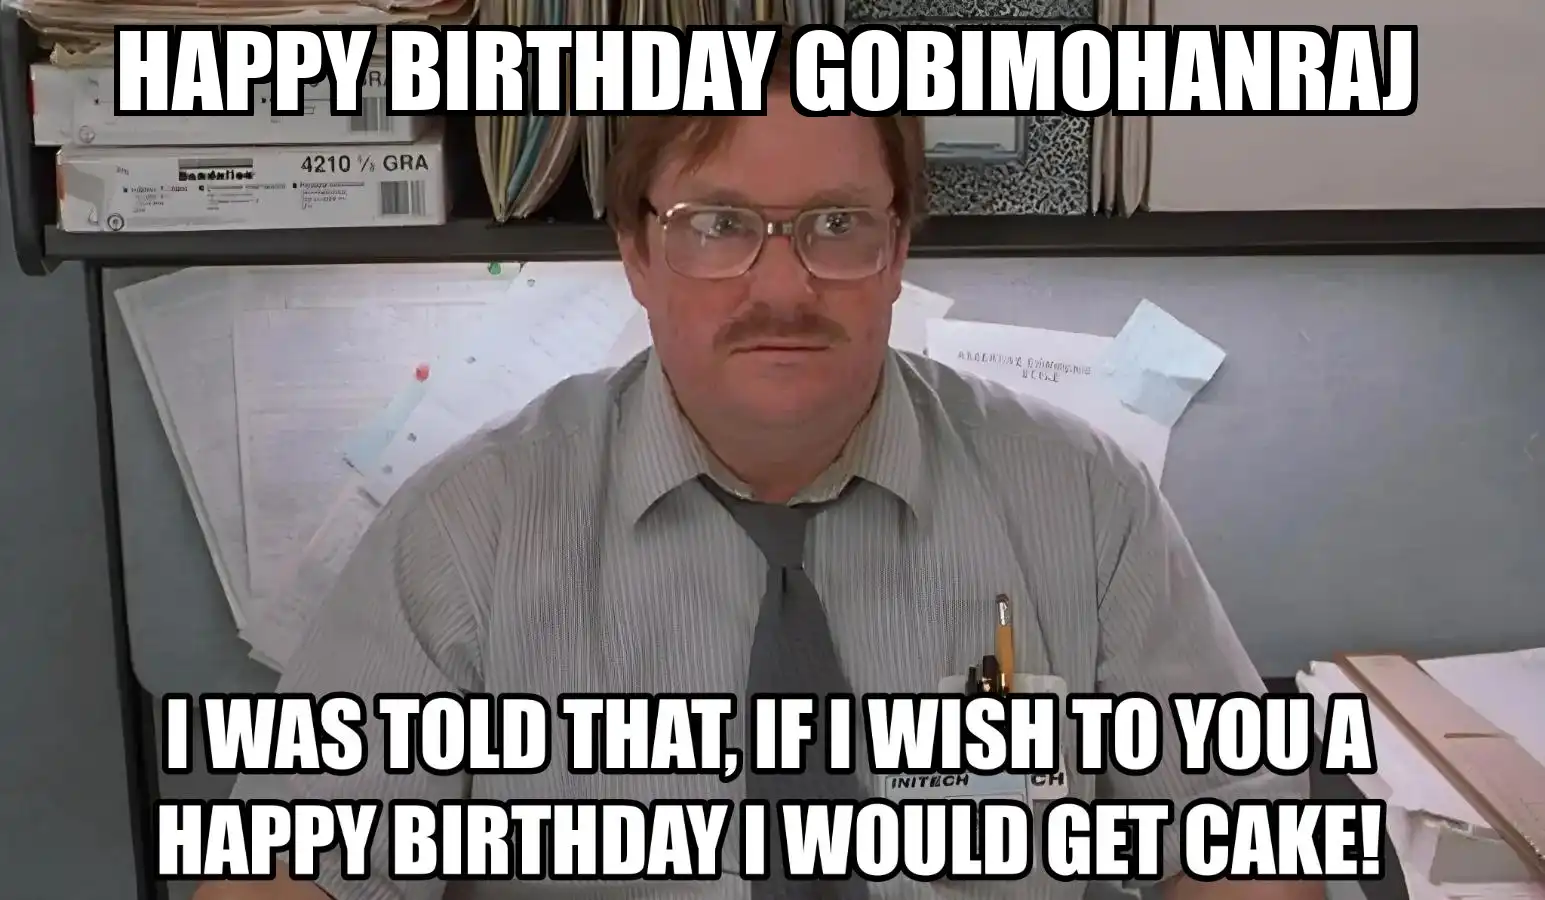 Happy Birthday Gobimohanraj I Would Get A Cake Meme